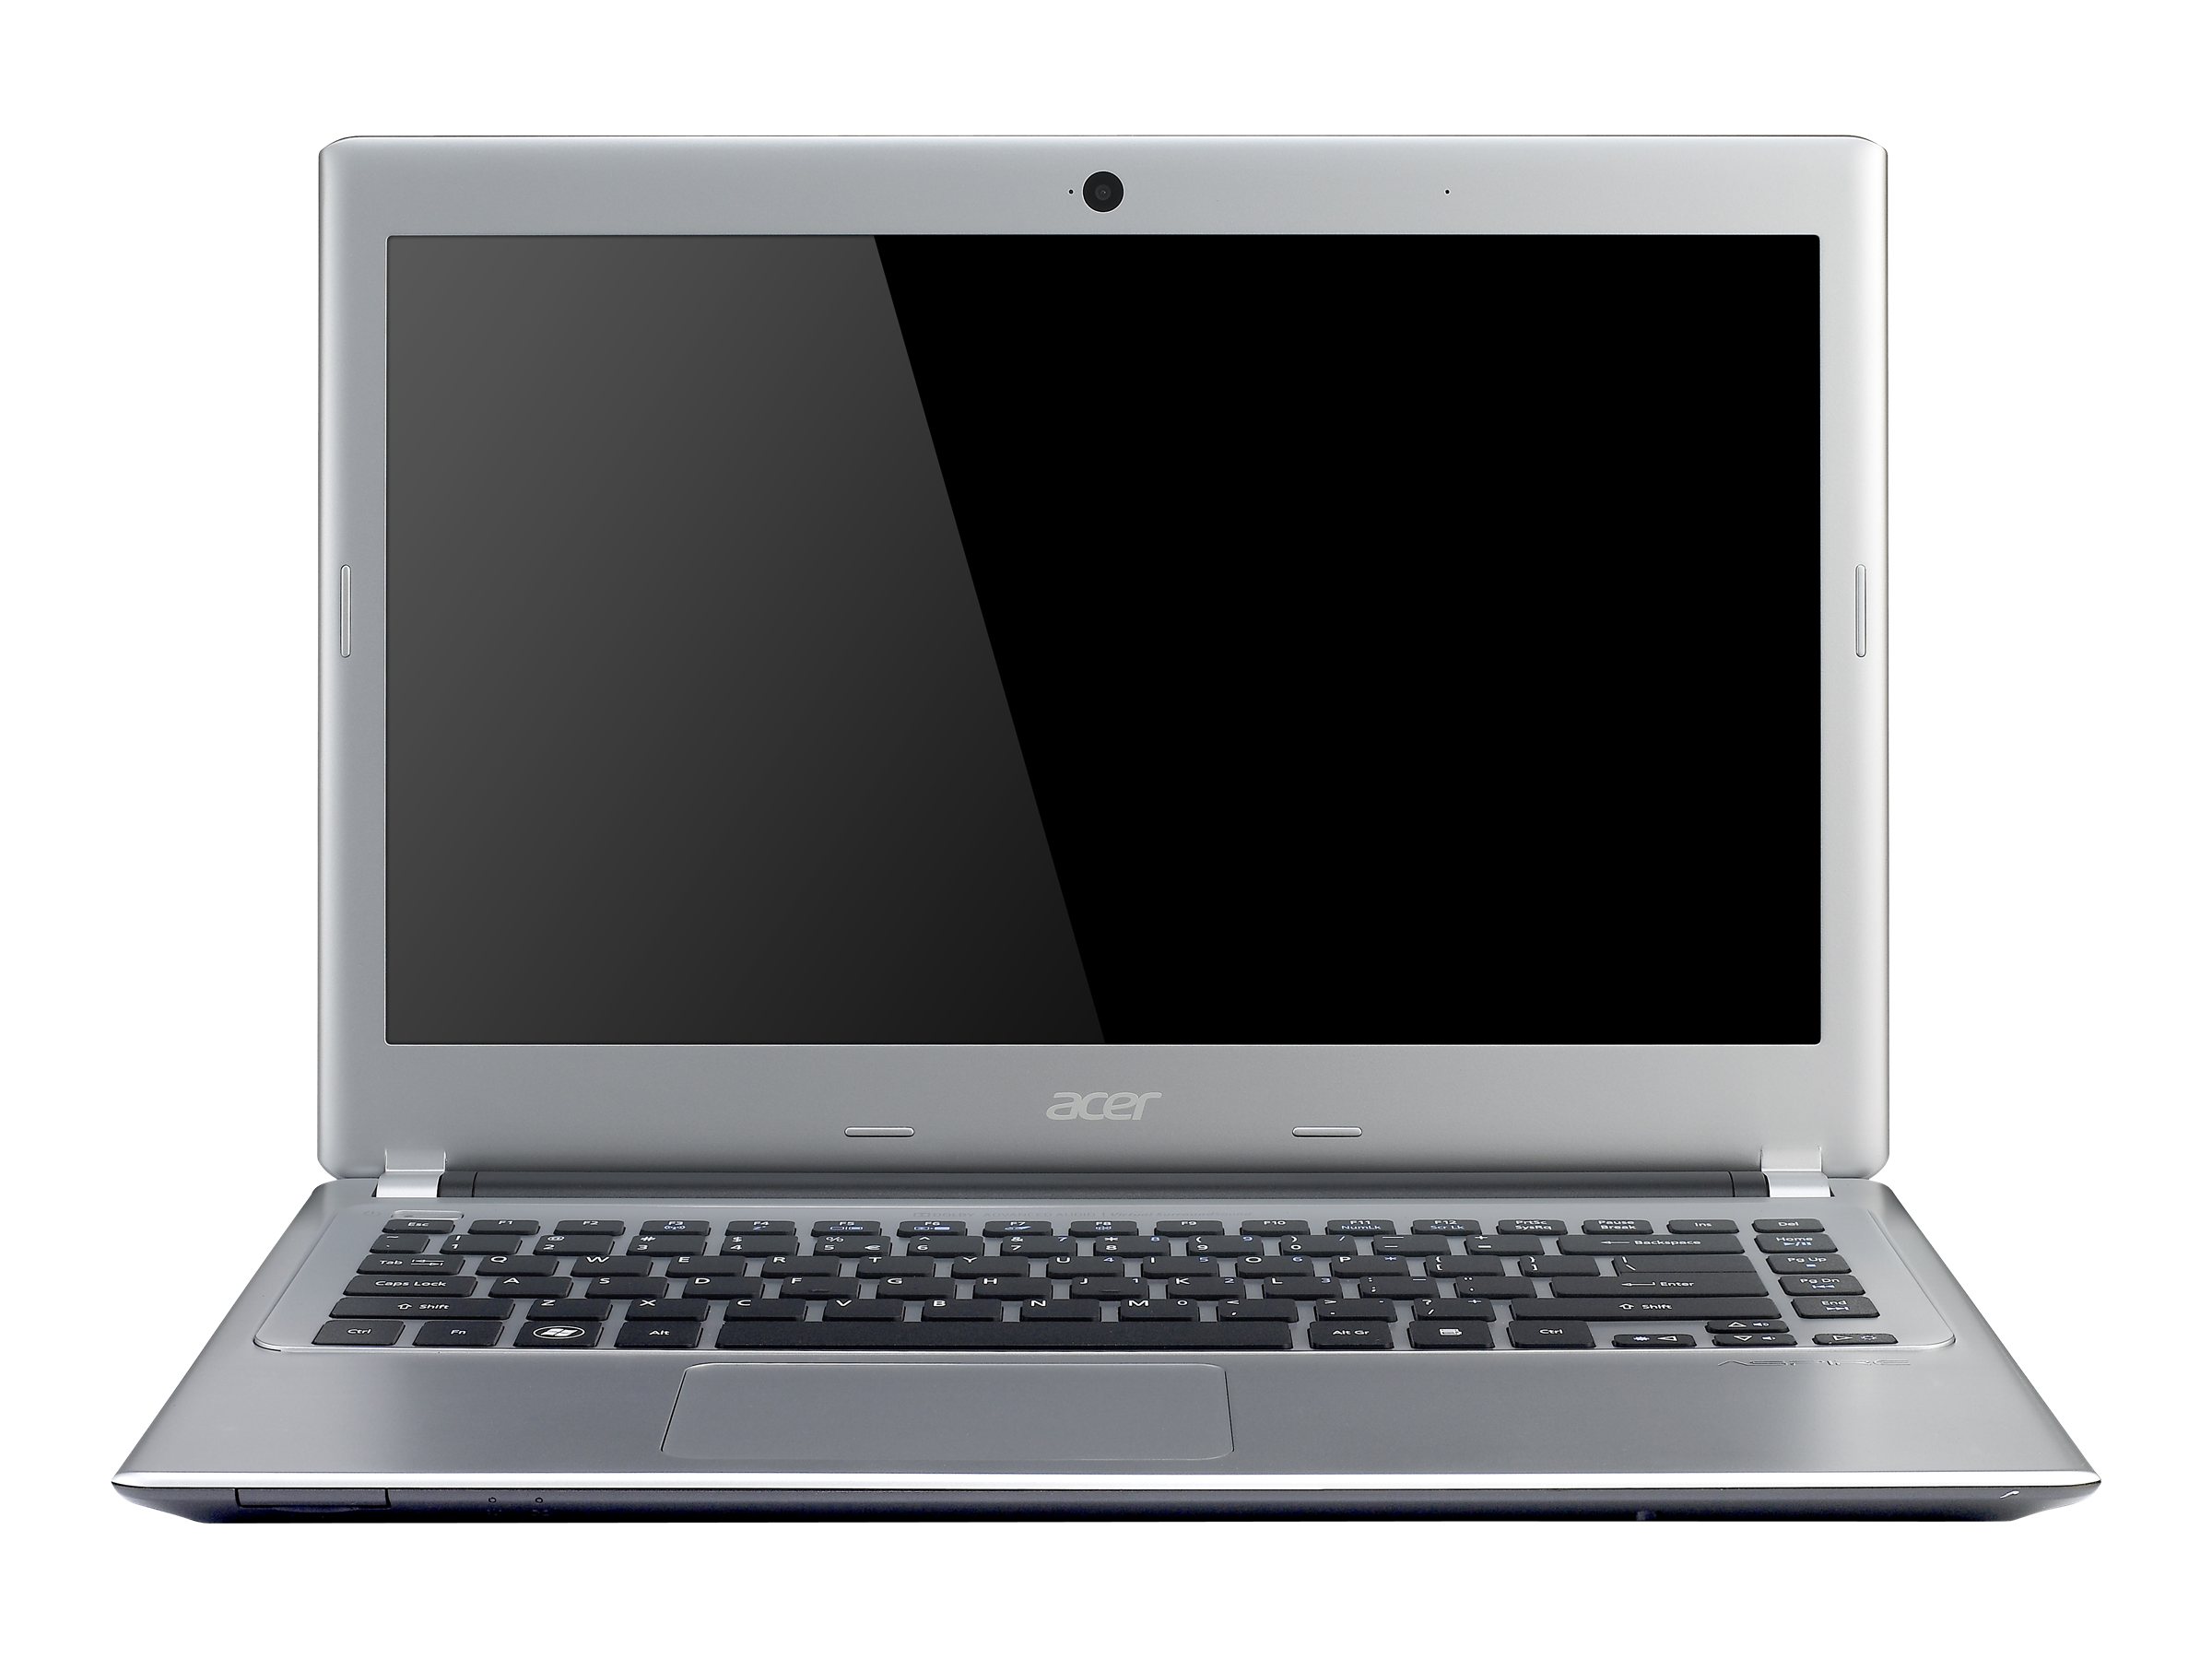 Acer Aspire V5 (471)